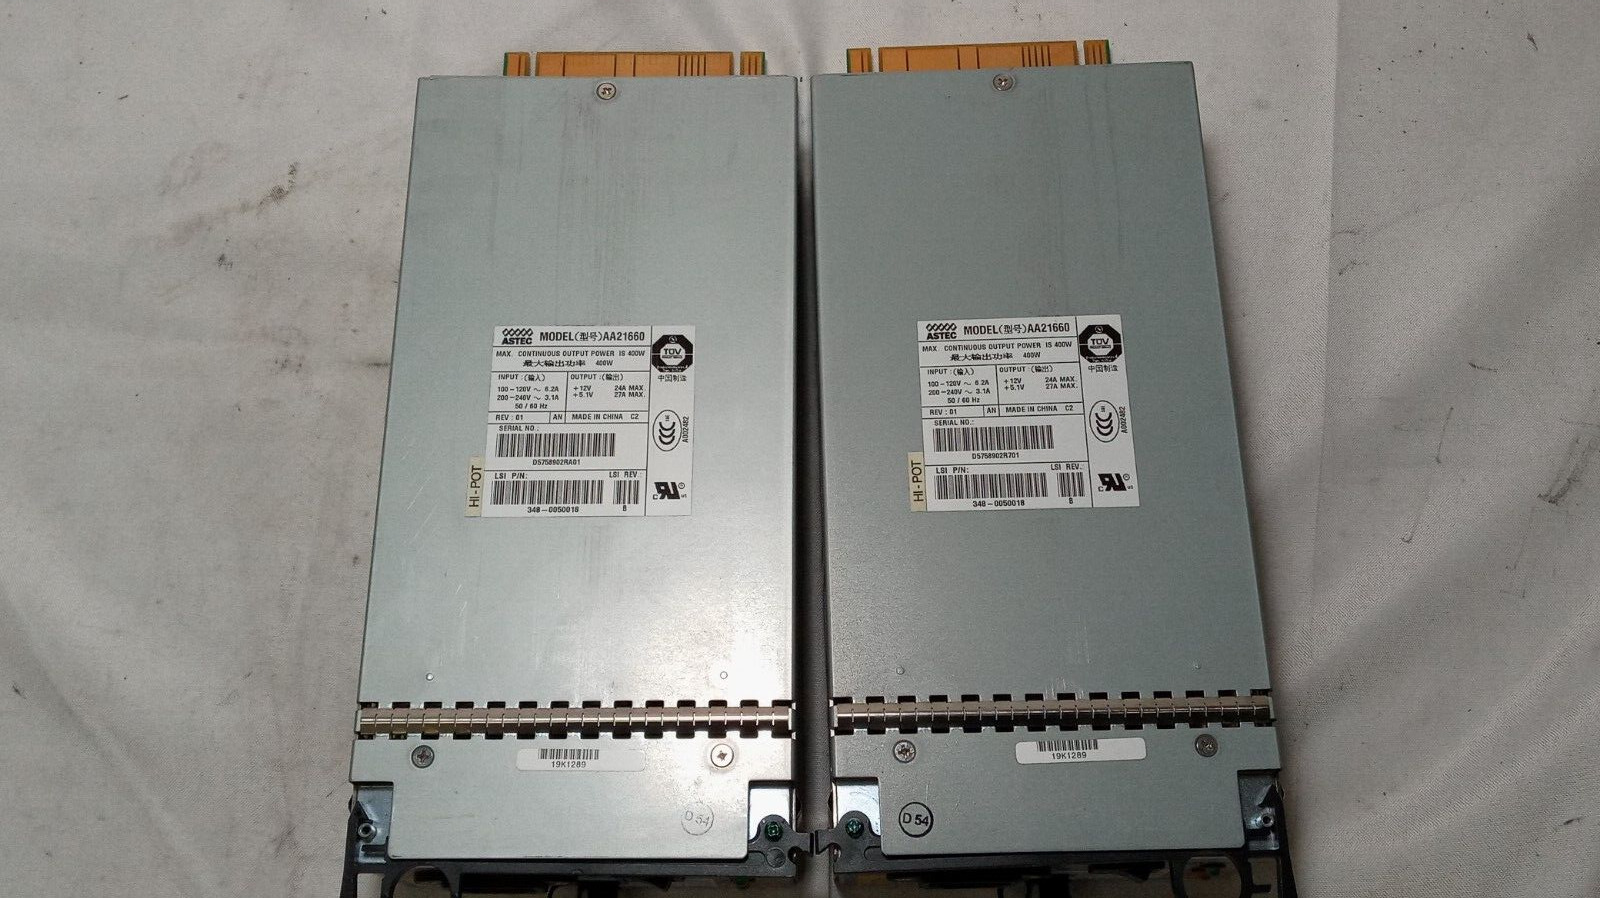 Lot of 2x SUN Server Astec AA21660 400W Server Power Supply 19K1289